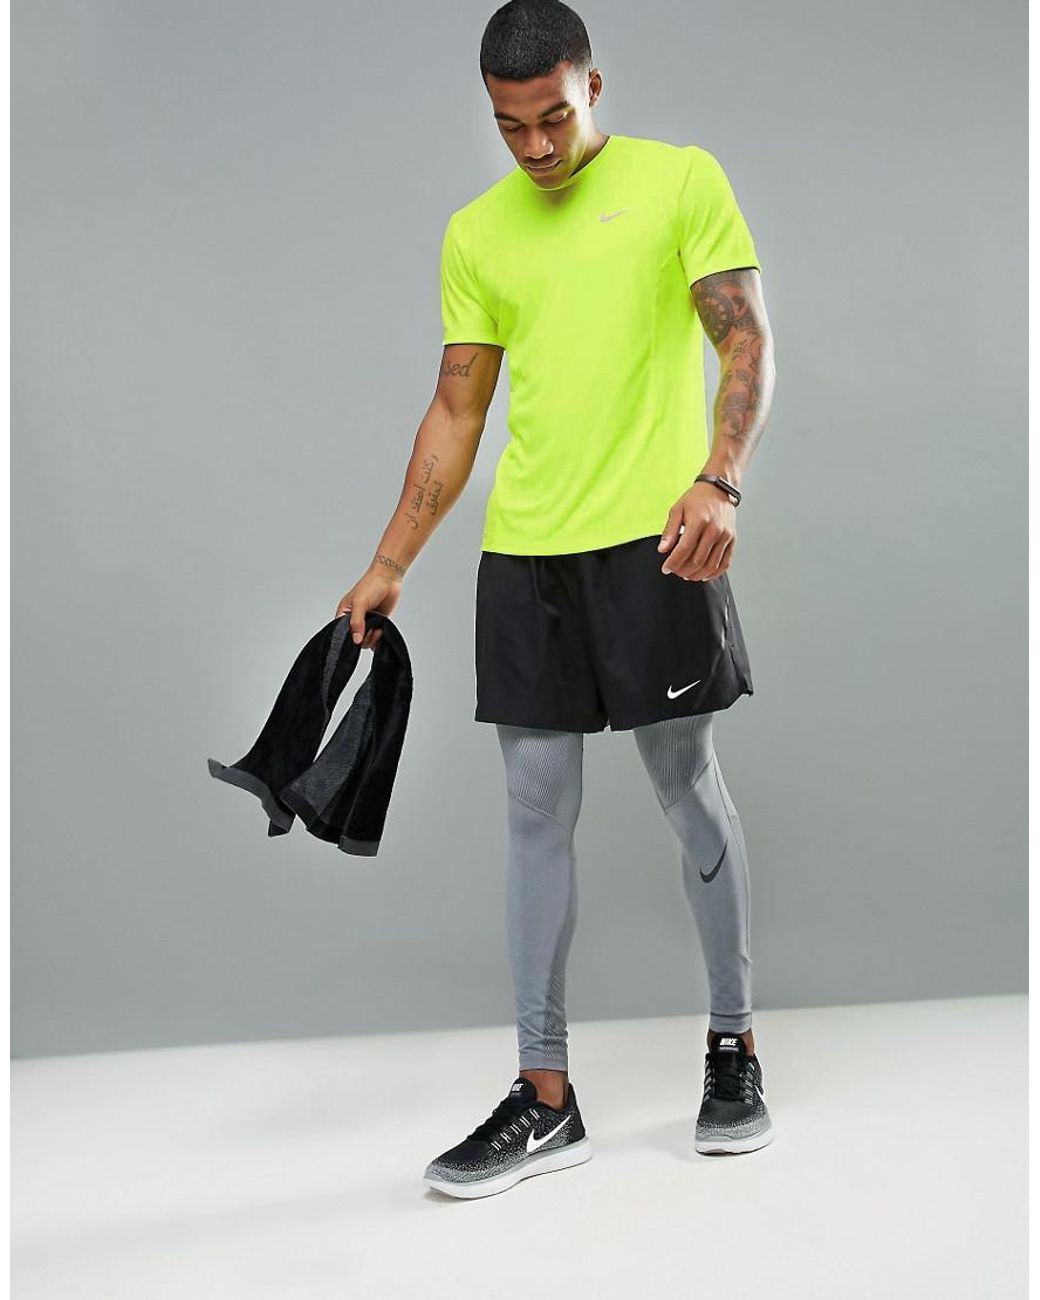 Nike Synthetic Nike Dri-fit Miler T-shirt In Yellow 683527-702 for Men |  Lyst UK